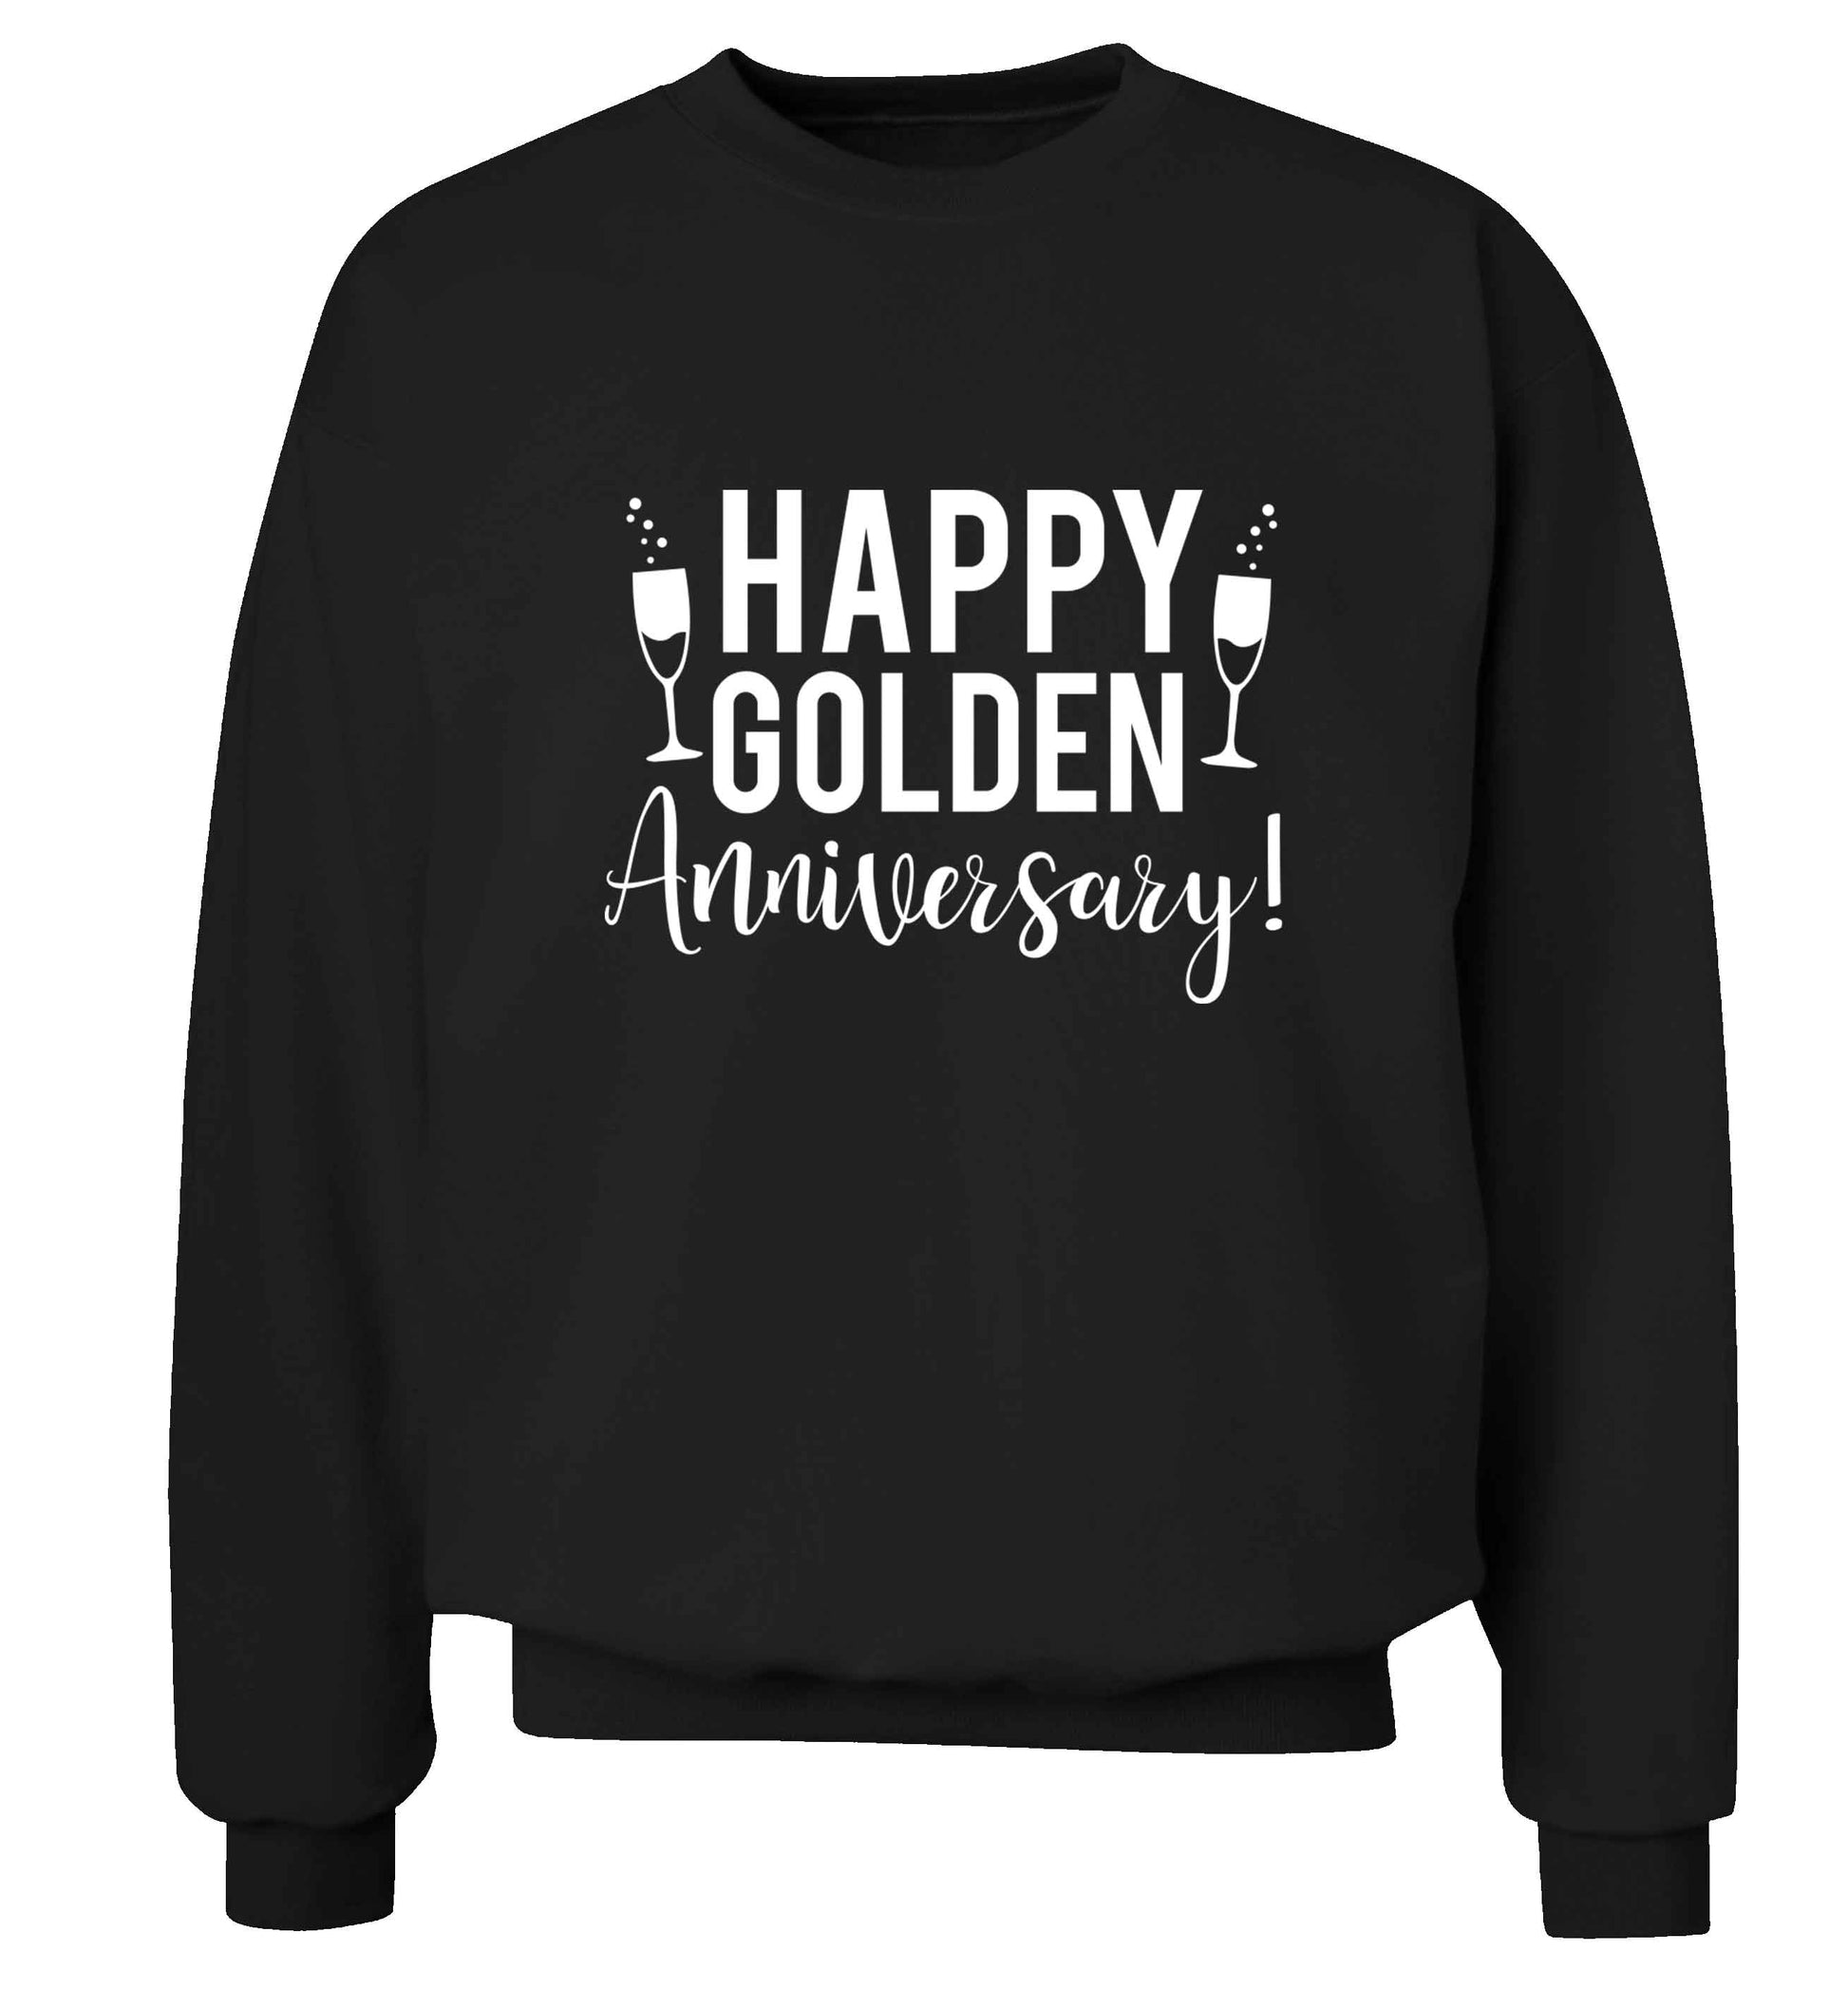 Happy golden anniversary! adult's unisex black sweater 2XL